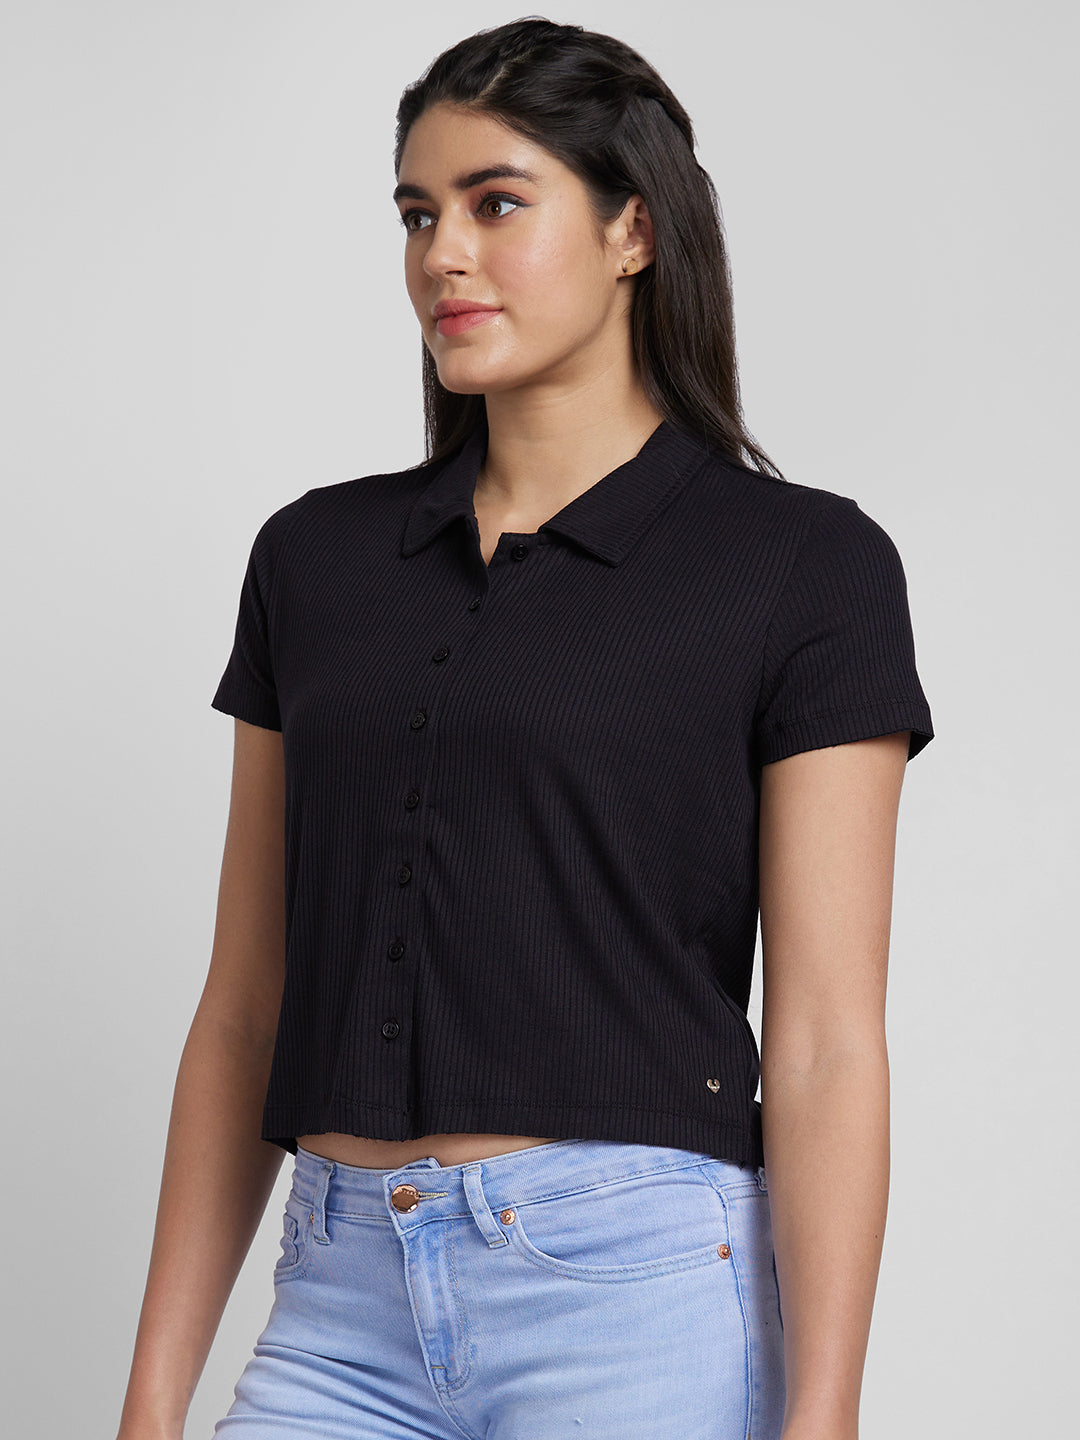 Spykar Black Blended Slim Fit Plain Polo Neck T-Shirts